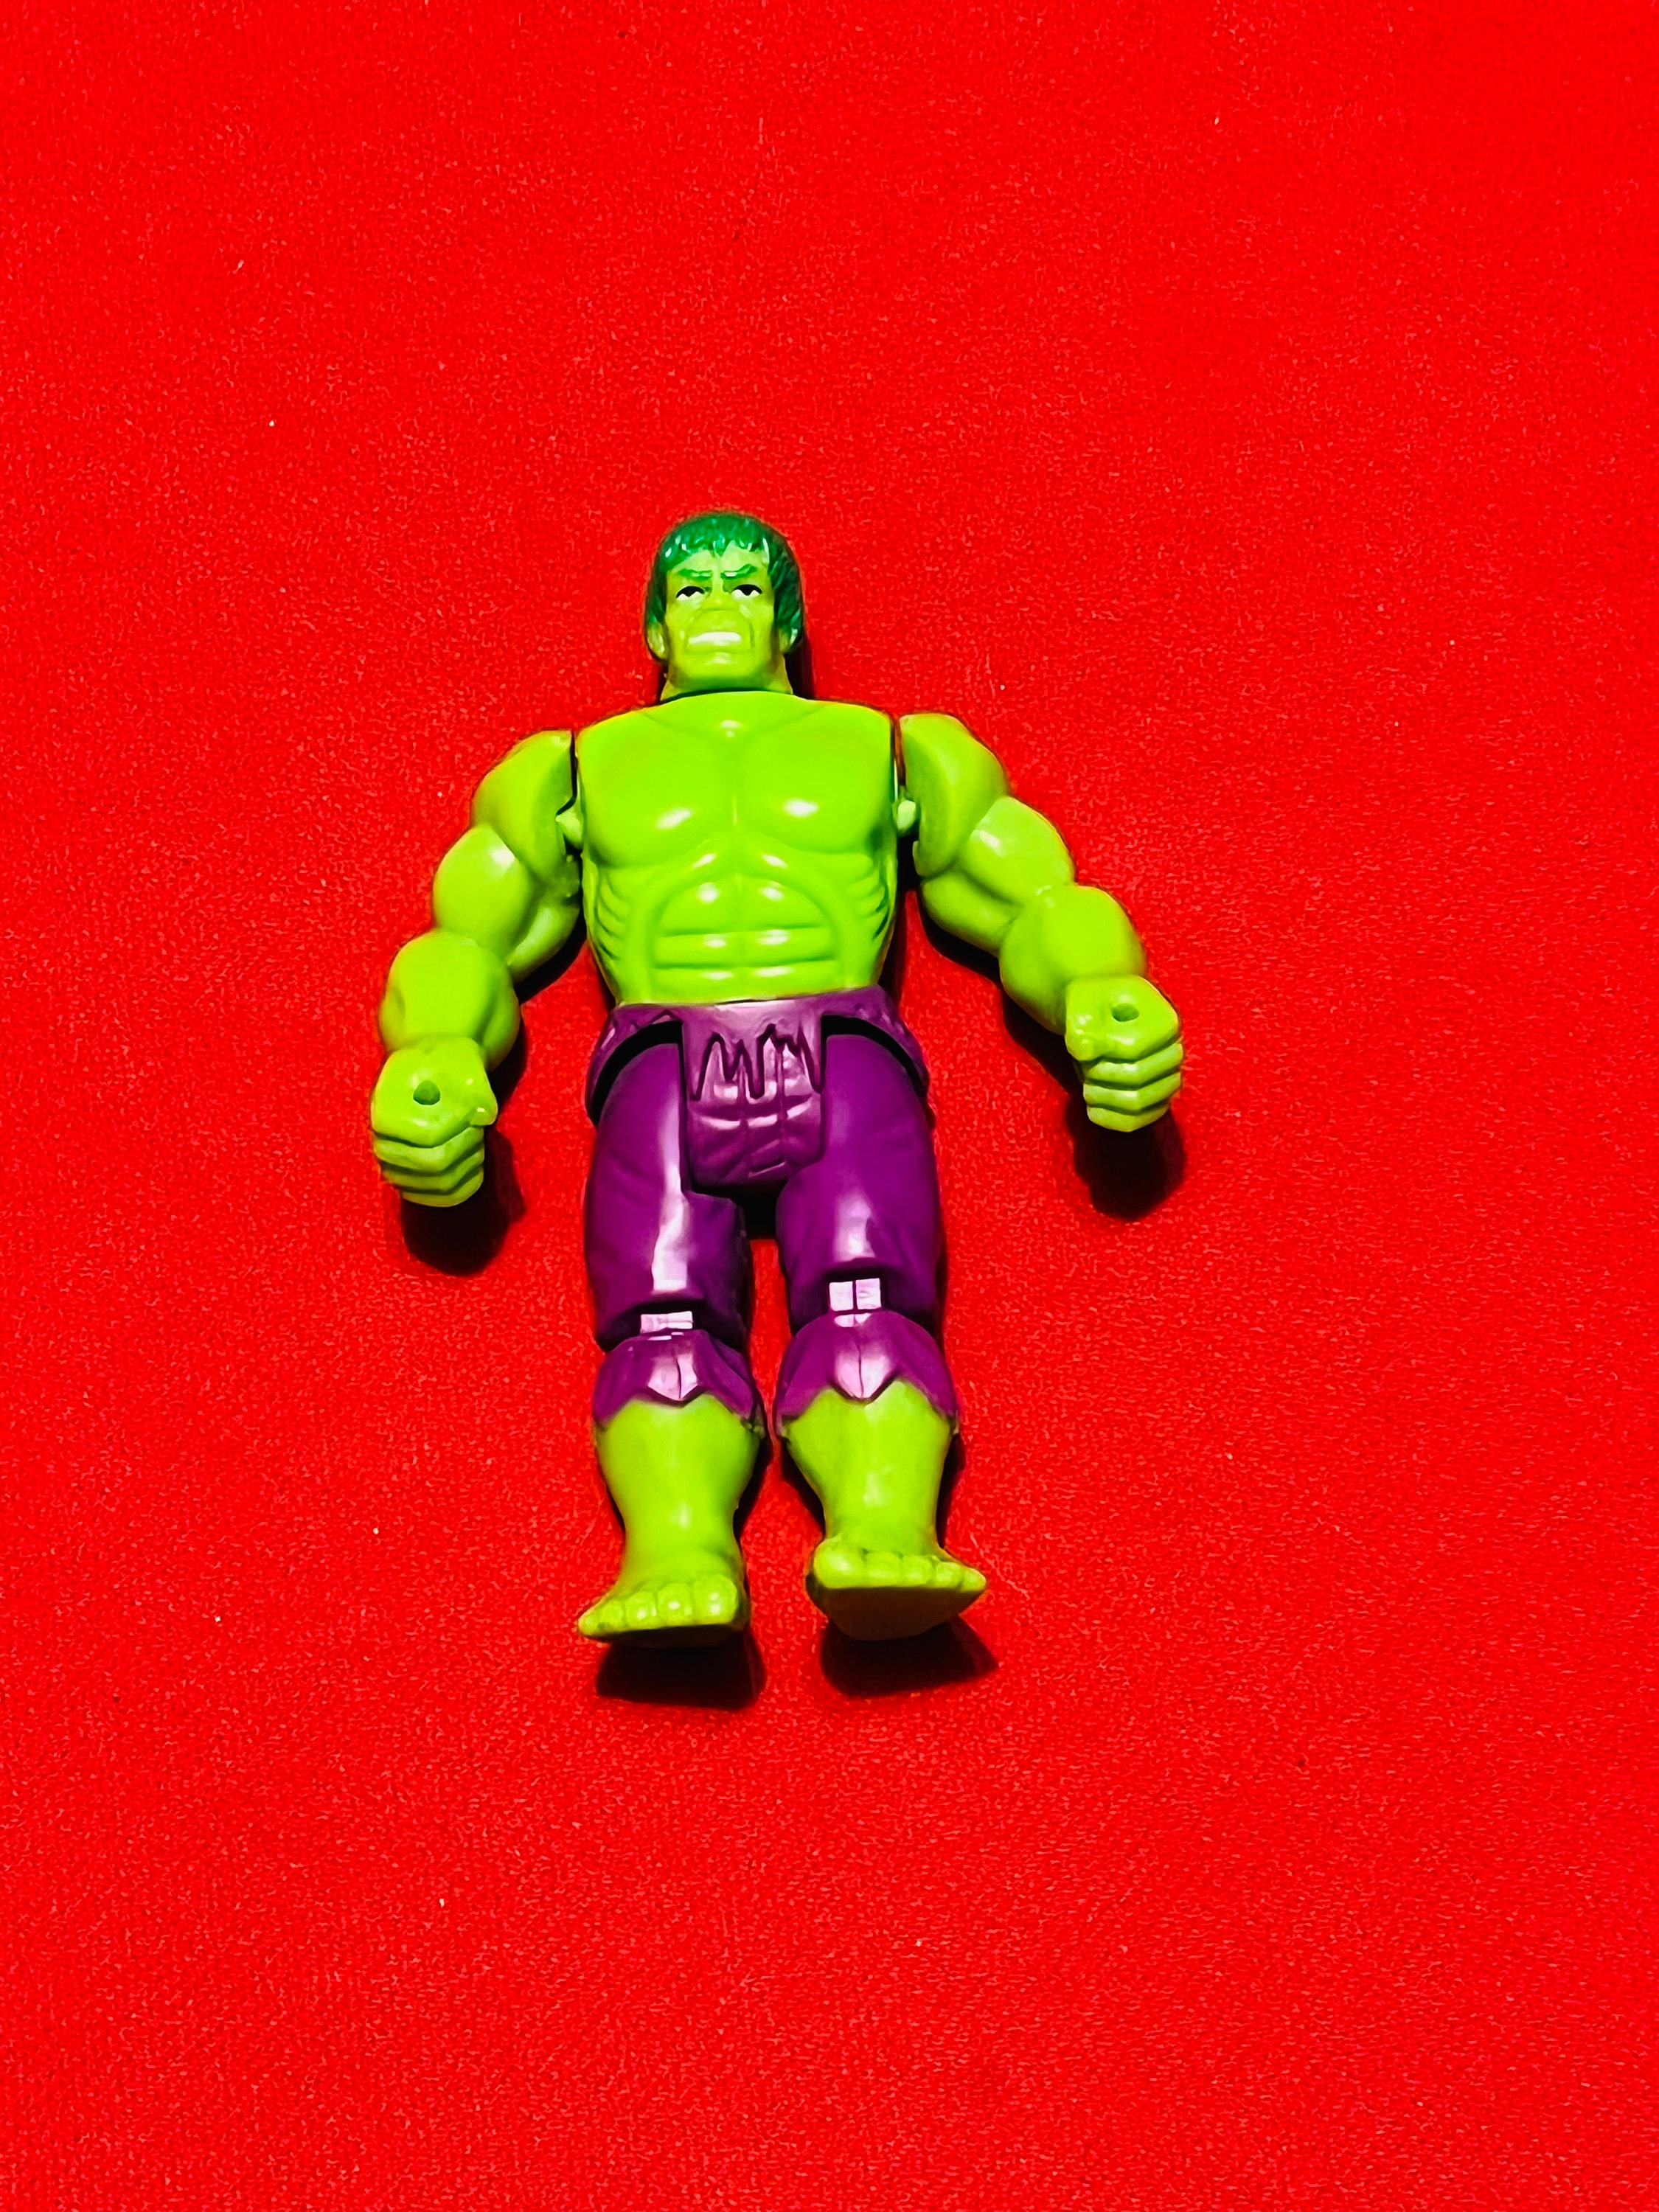 P PRODIGY TOYS Incredible Hulk Mini Action Figure Toy/Hulk Figurine